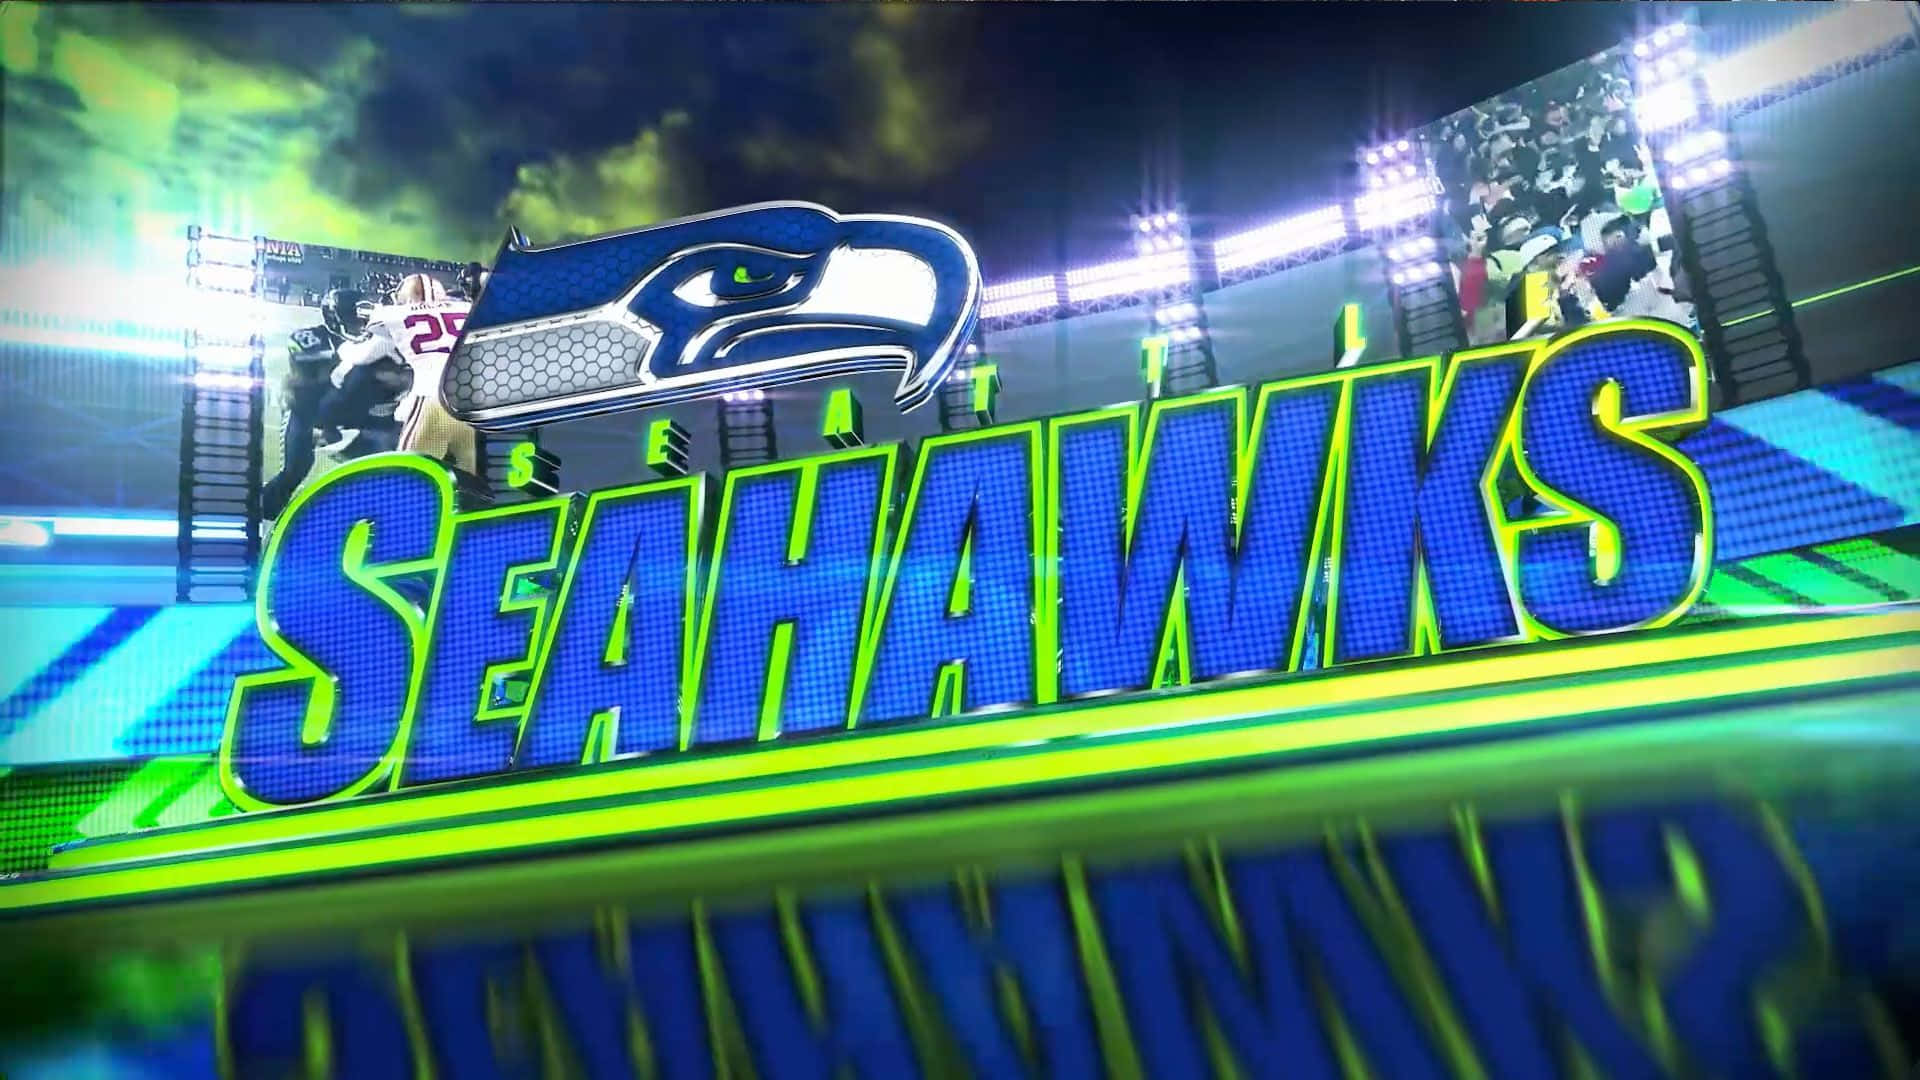 Seattle Seahawks - The spirit of American football